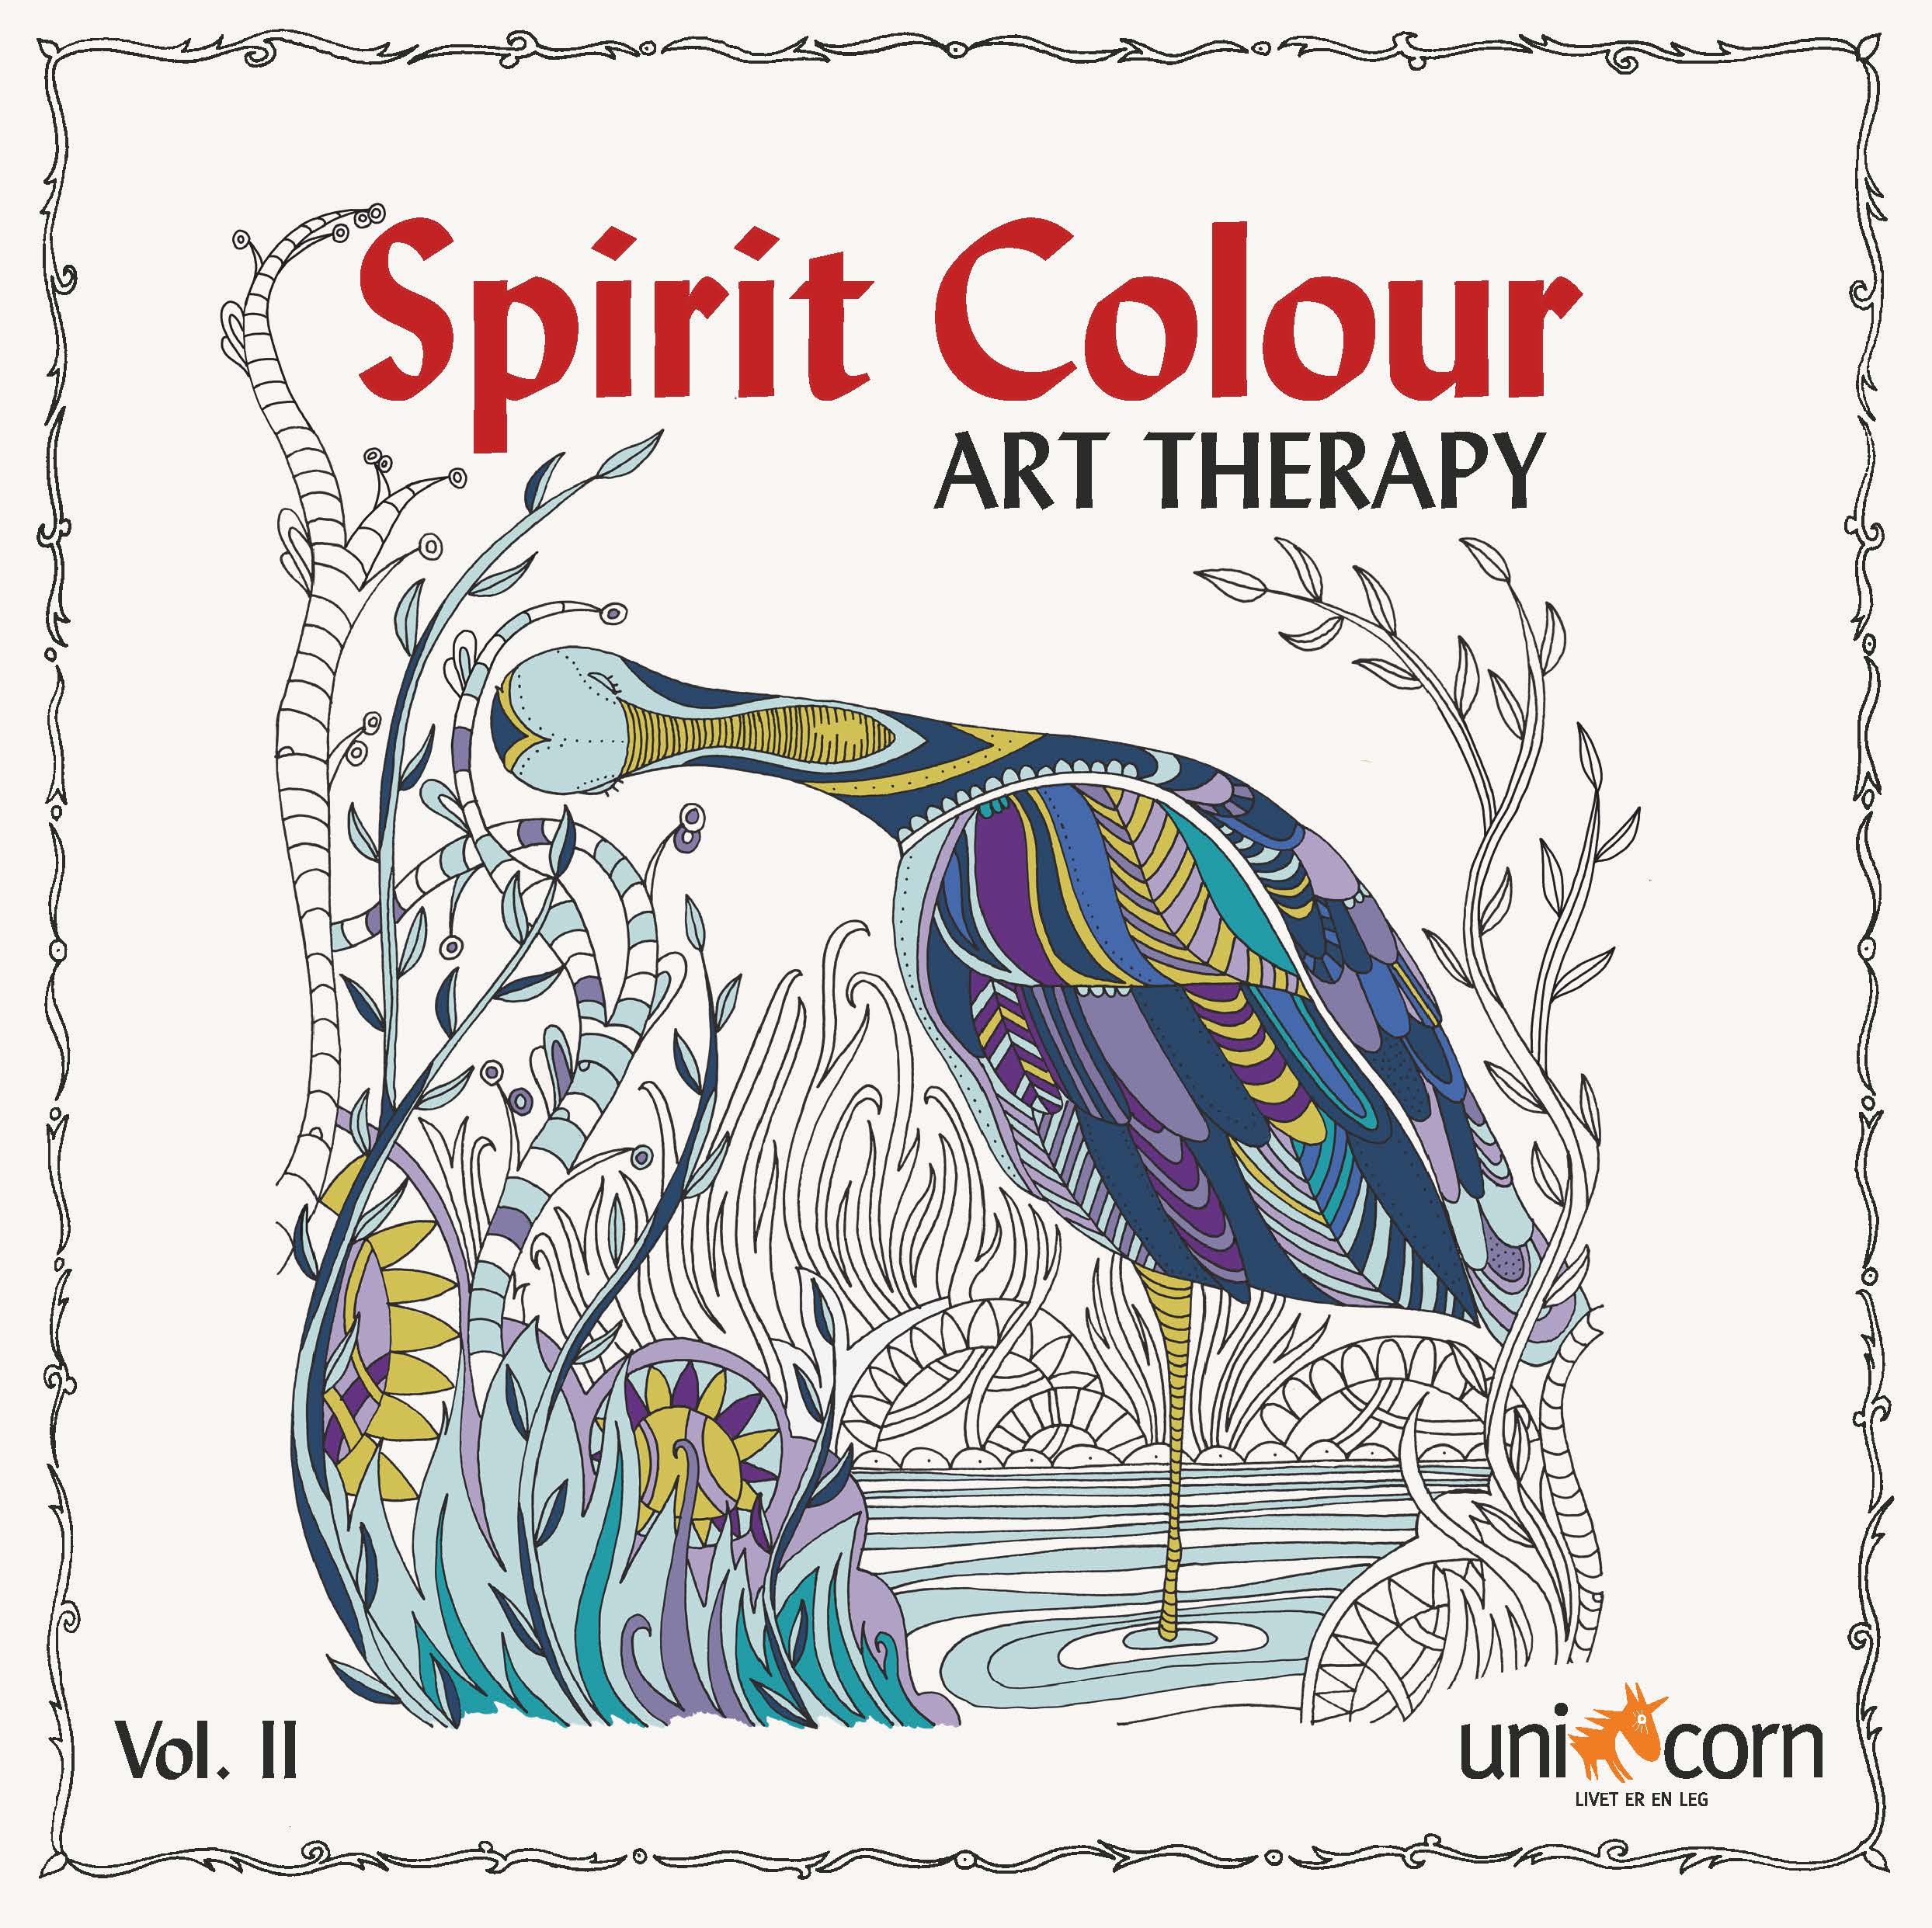 571-35-16000-72-7 Spirit Colour Art Therapy Vol. II